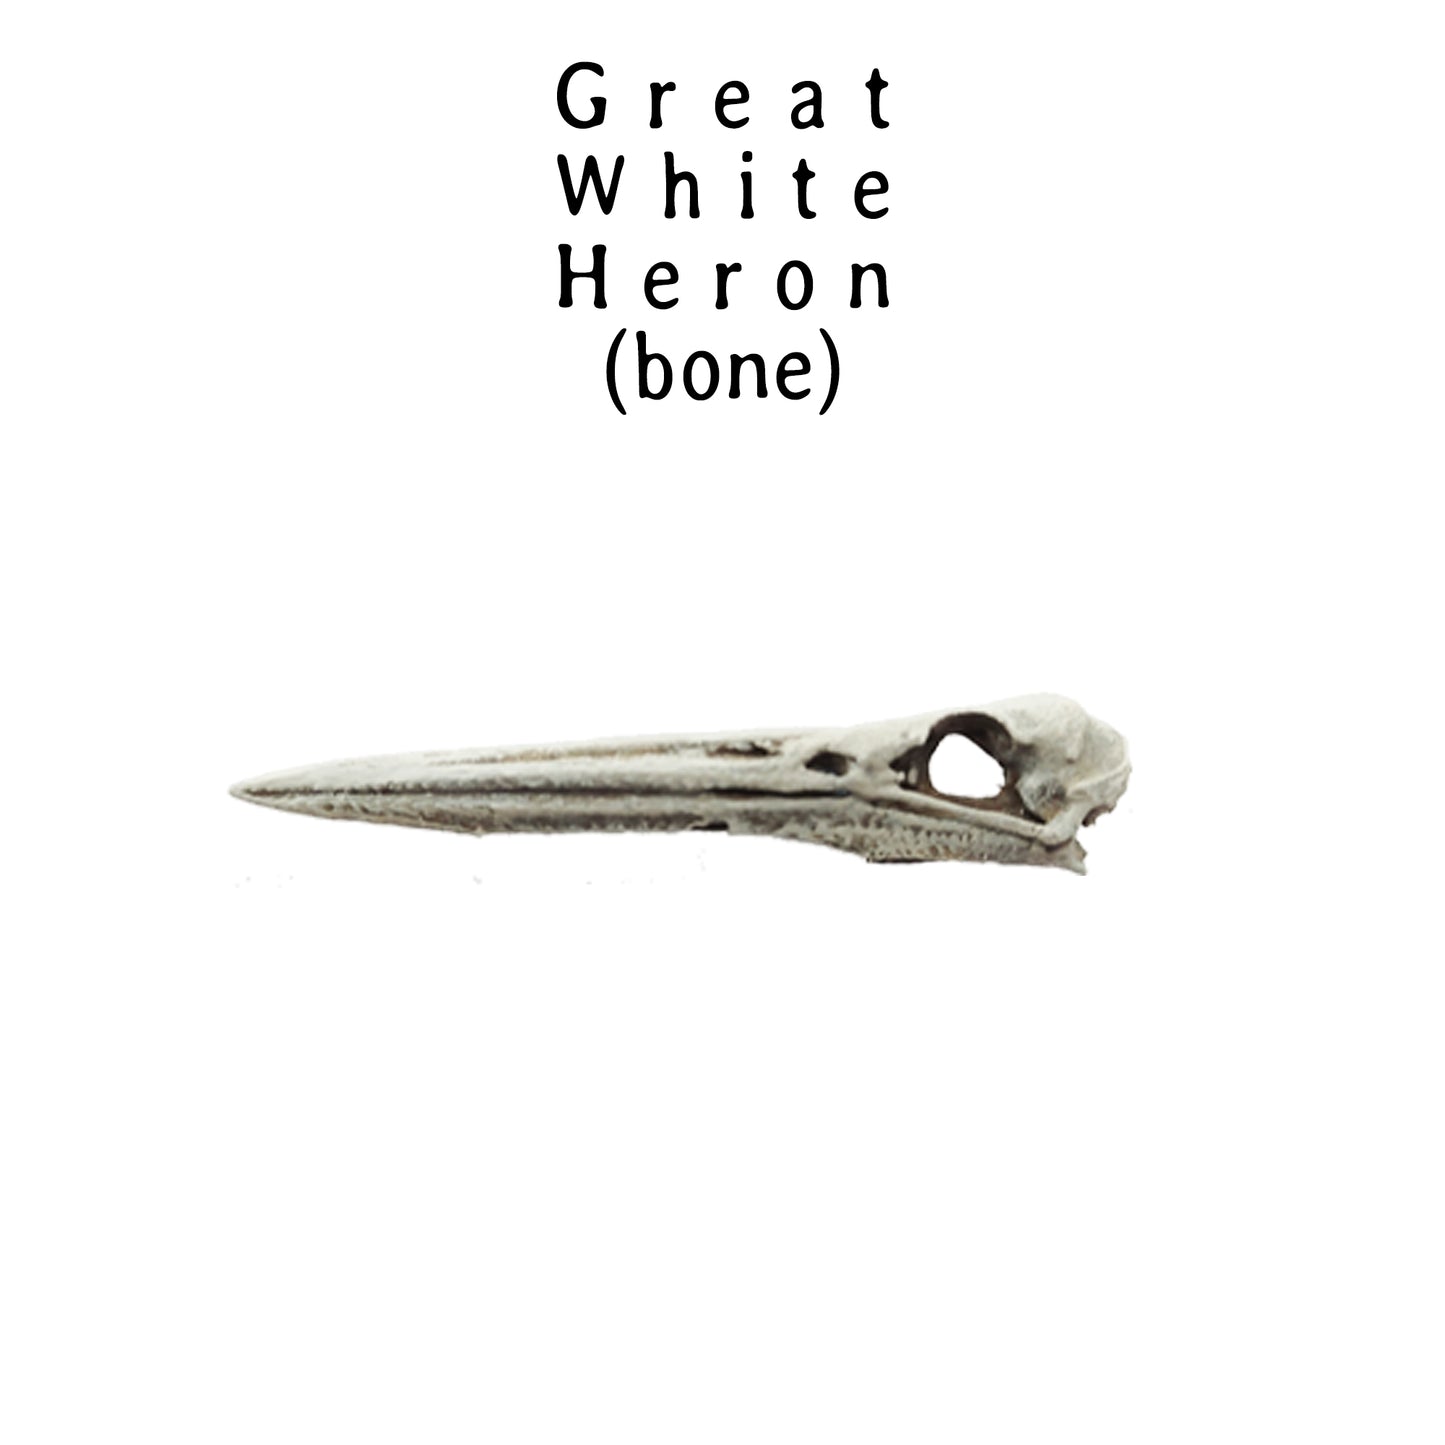 Great White Heron Skull Replica